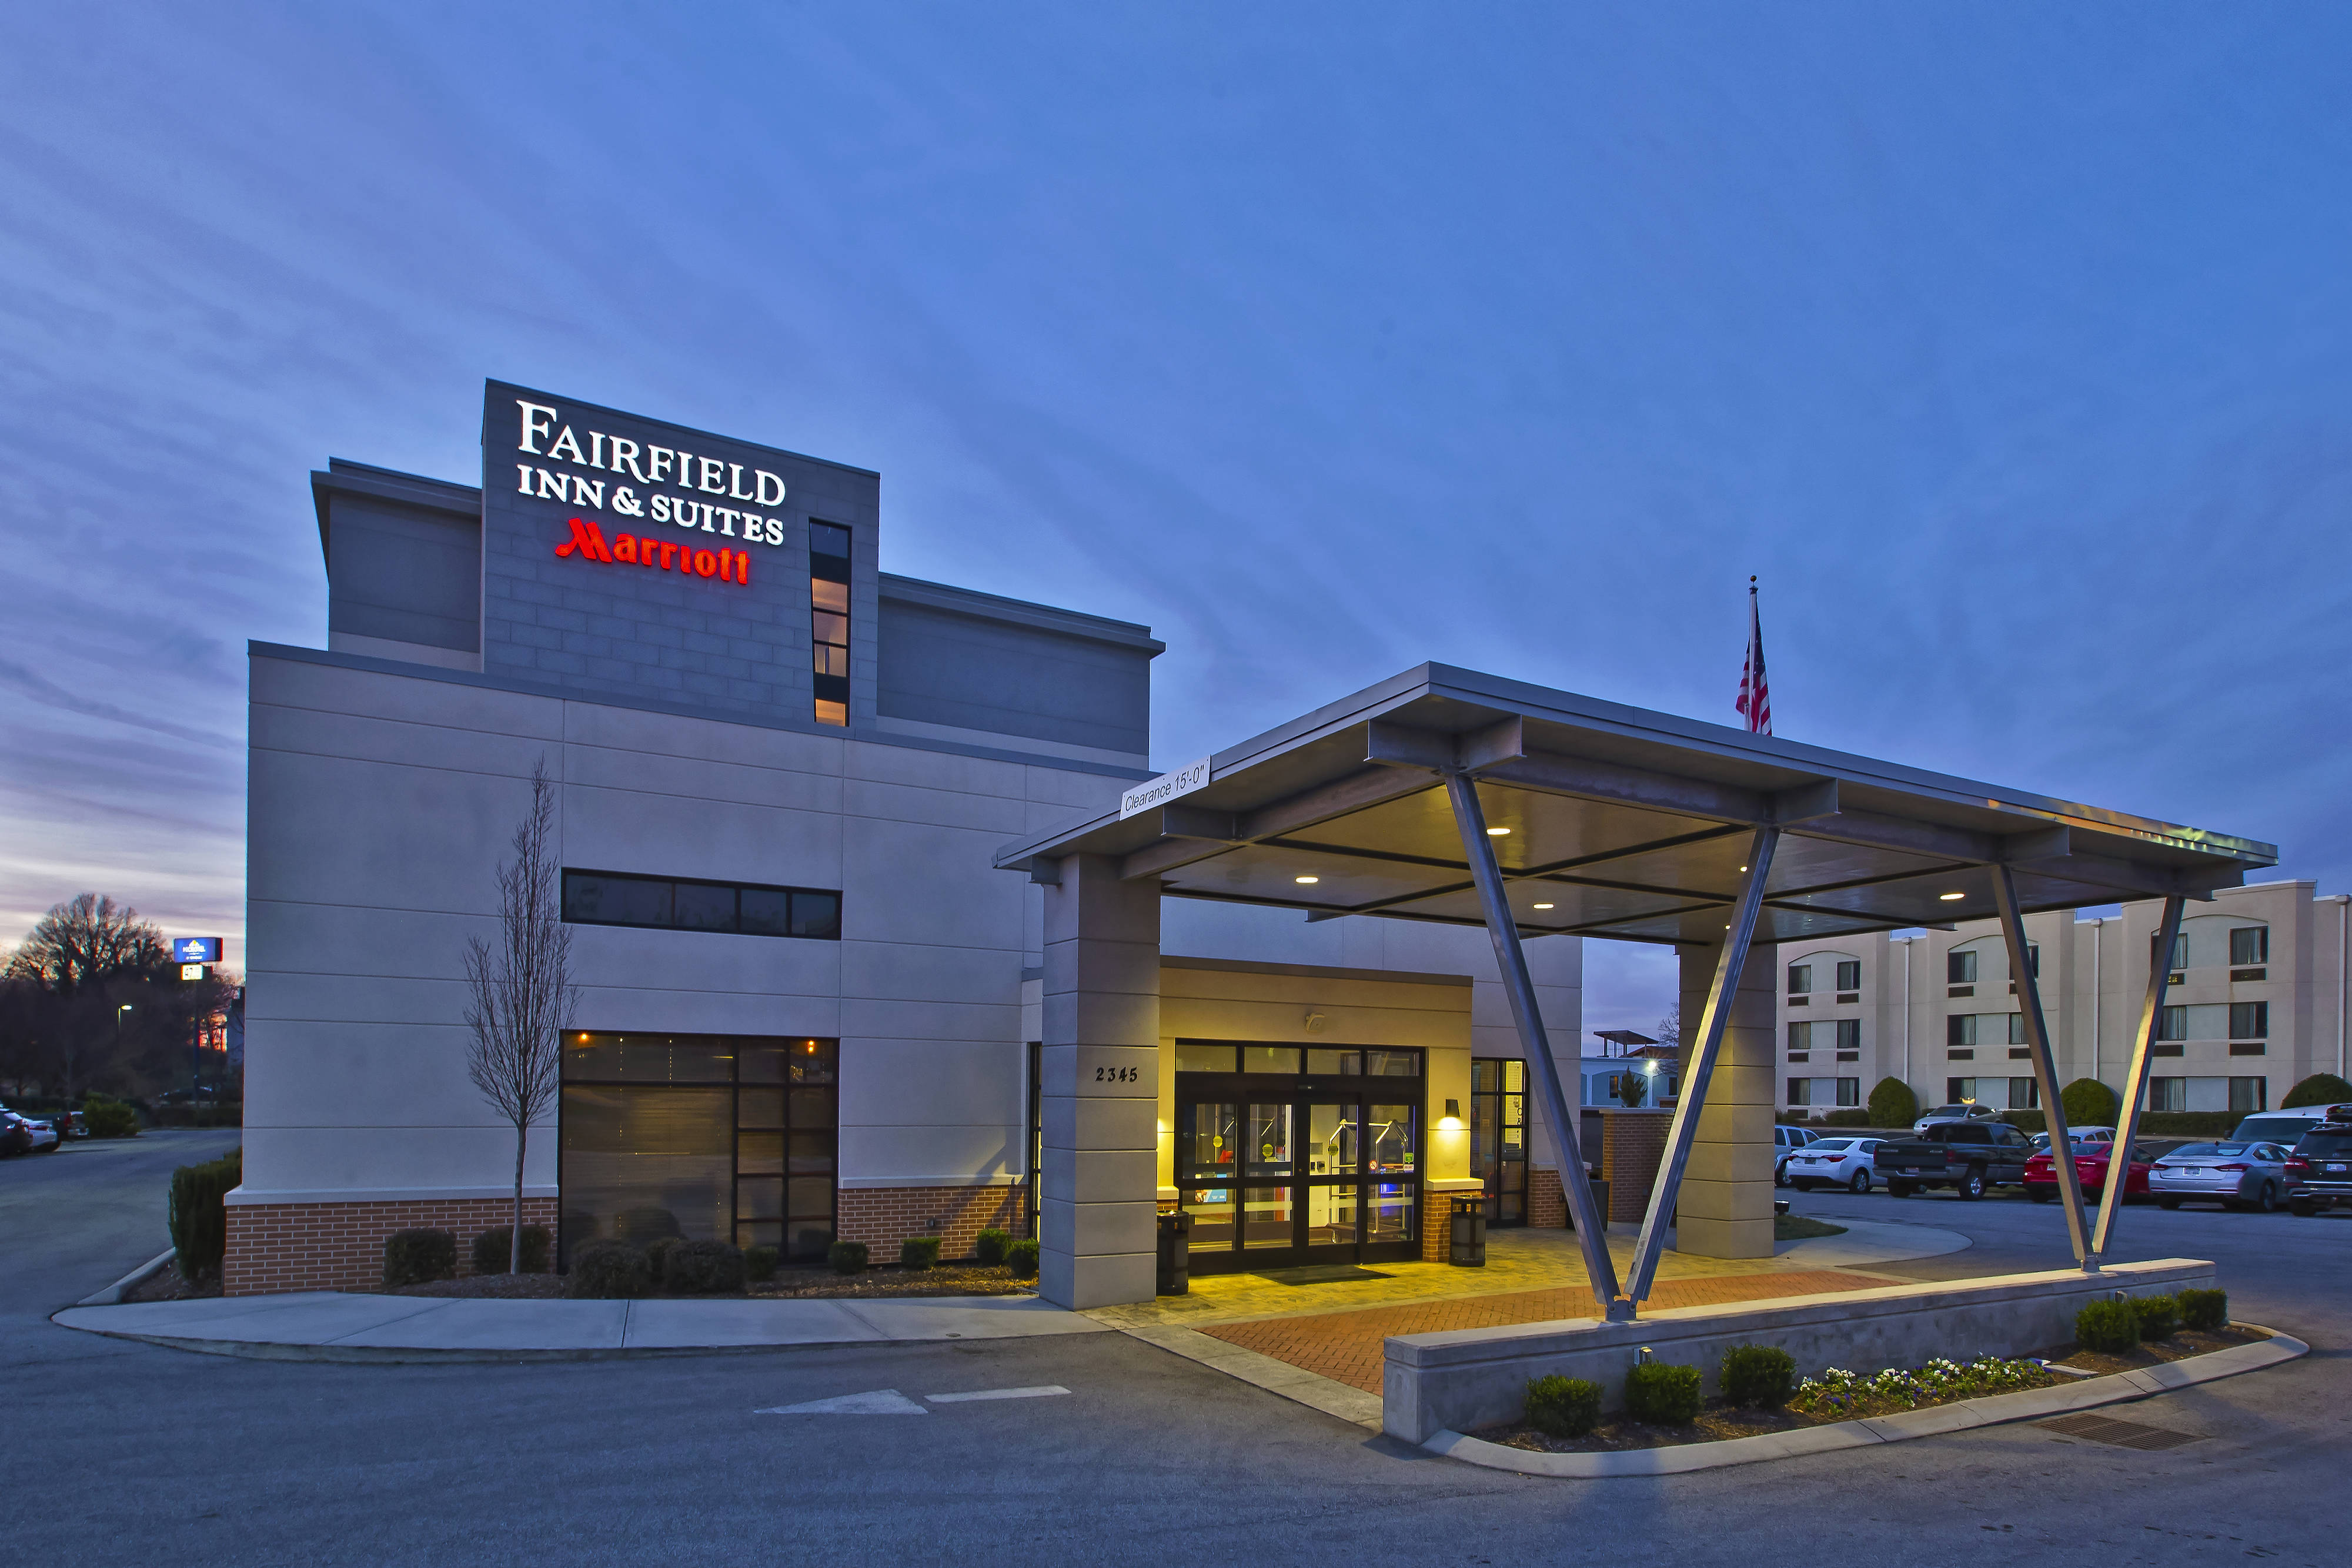 Photo of Fairfield Inn & Suites Chattanooga East, Chattanooga, TN